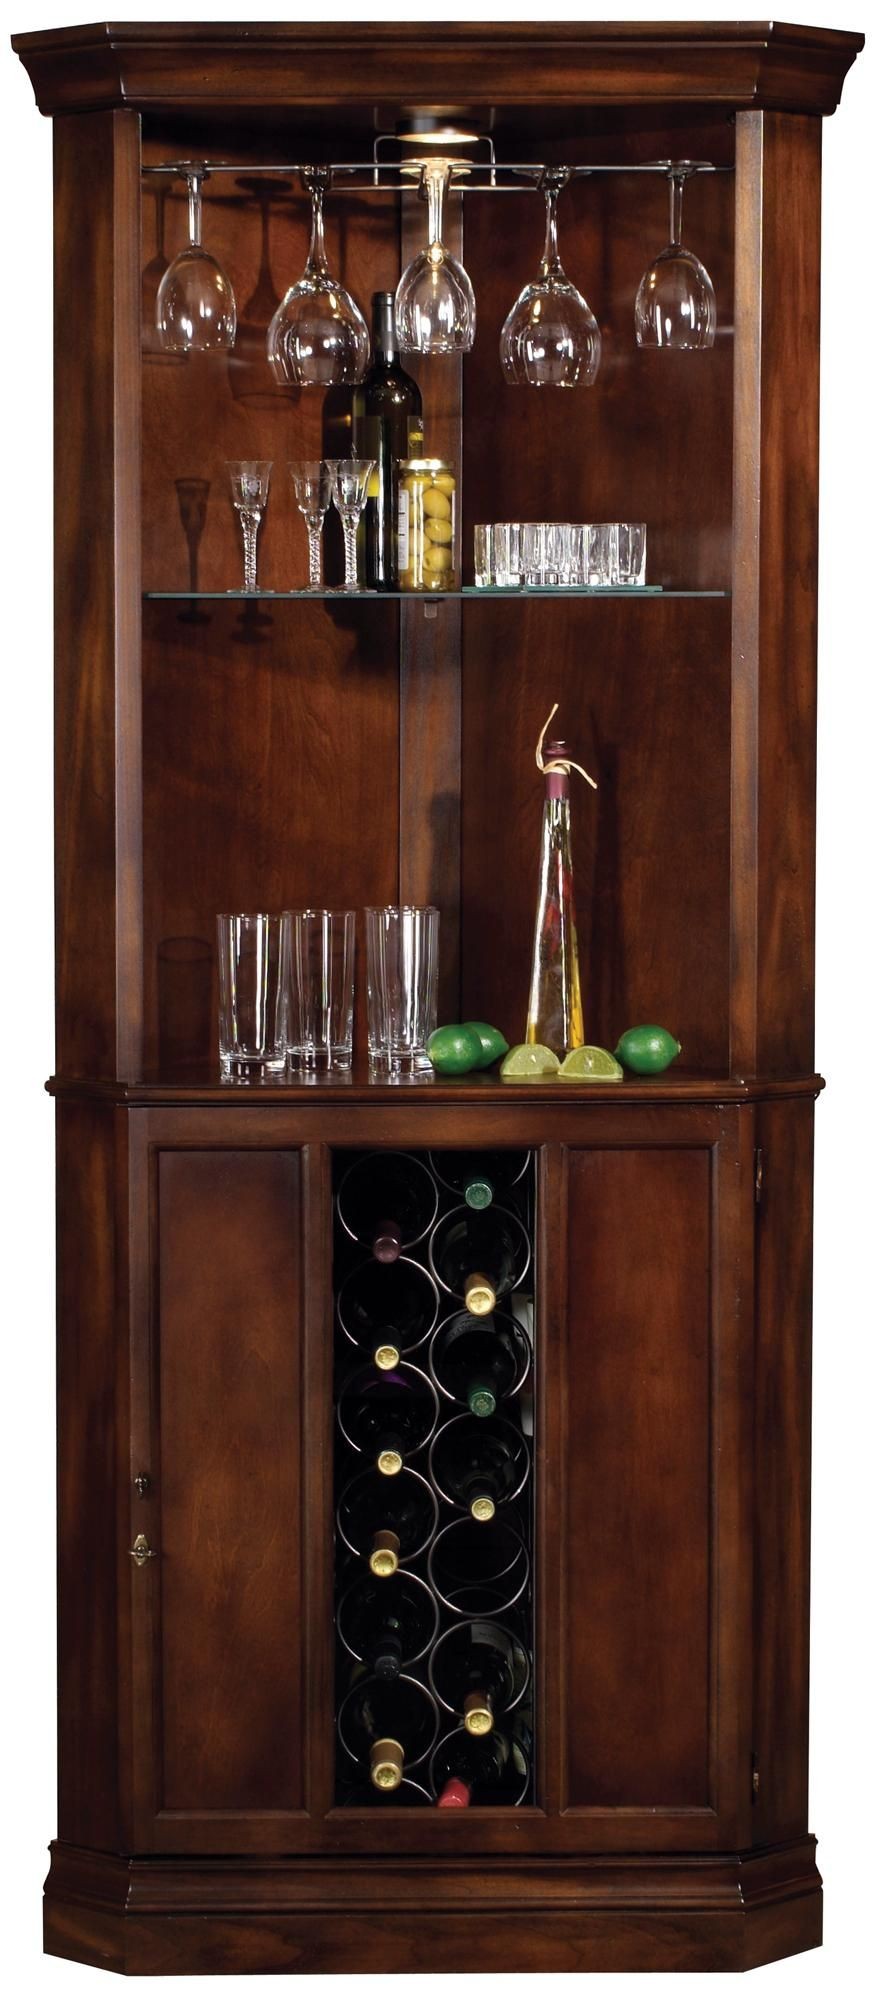 Howard Miller Piedmont Rustic Cherry Corner Bar Cabinet with regard to dimensions 877 X 2000